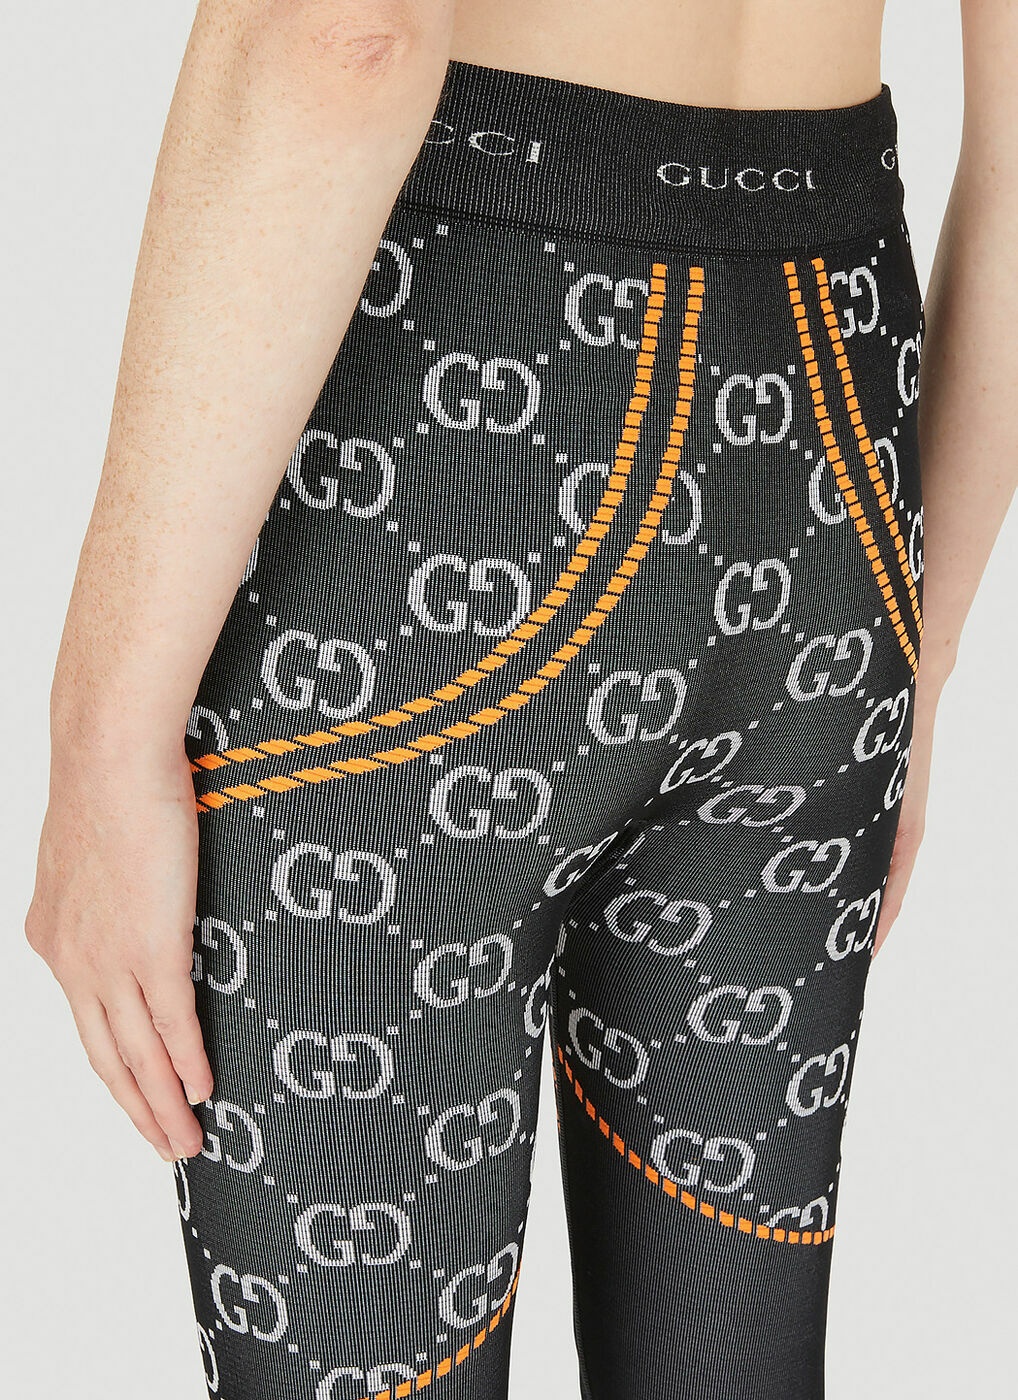 Gucci Women's Logo Jacquard Leggings in Black